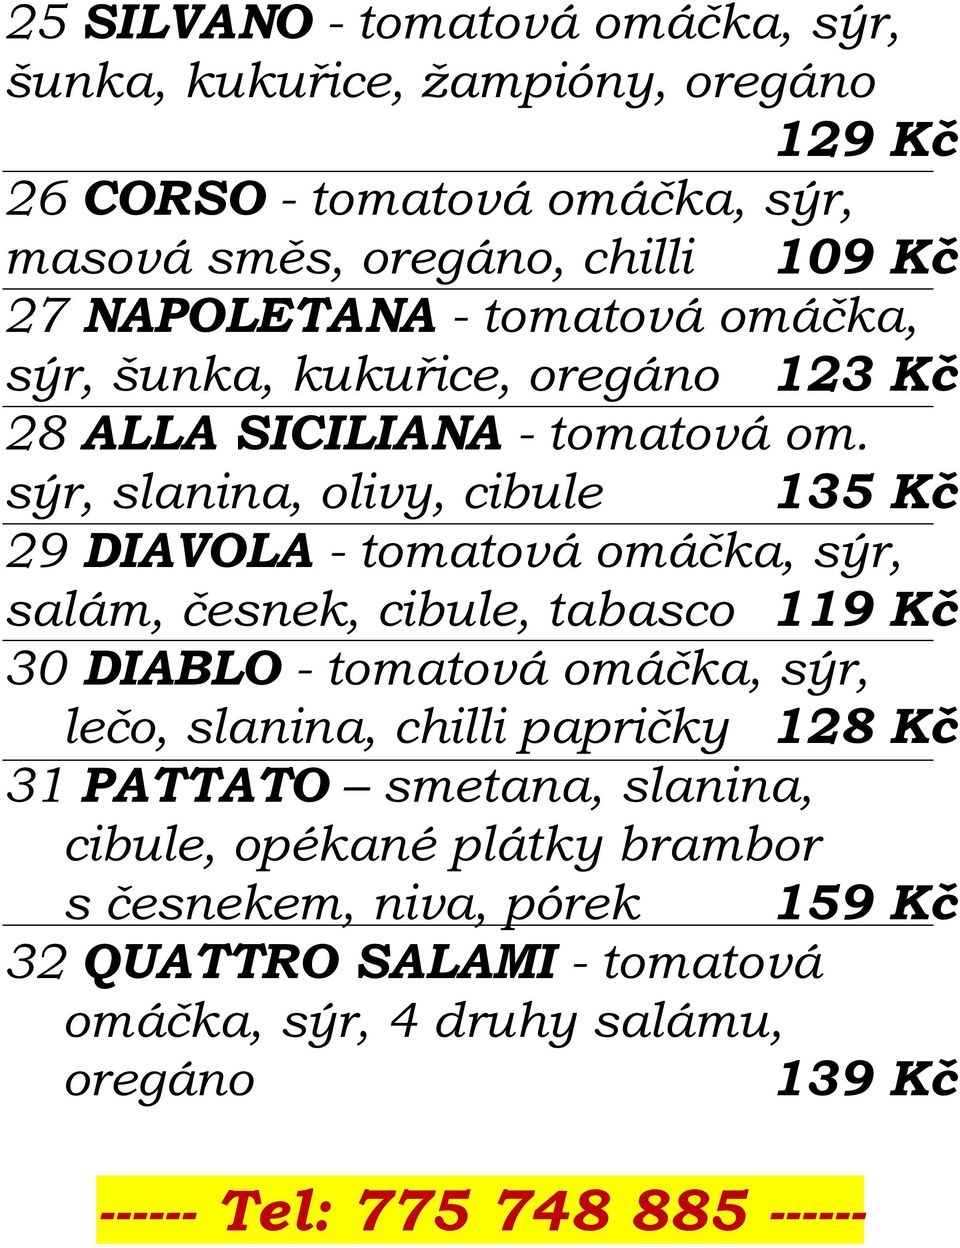 sýr, slanina, olivy, cibule 135 Kč 29 DIAVOLA - tomatová omáčka, sýr, salám, česnek, cibule, tabasco 119 Kč 30 DIABLO - tomatová omáčka, sýr, lečo,